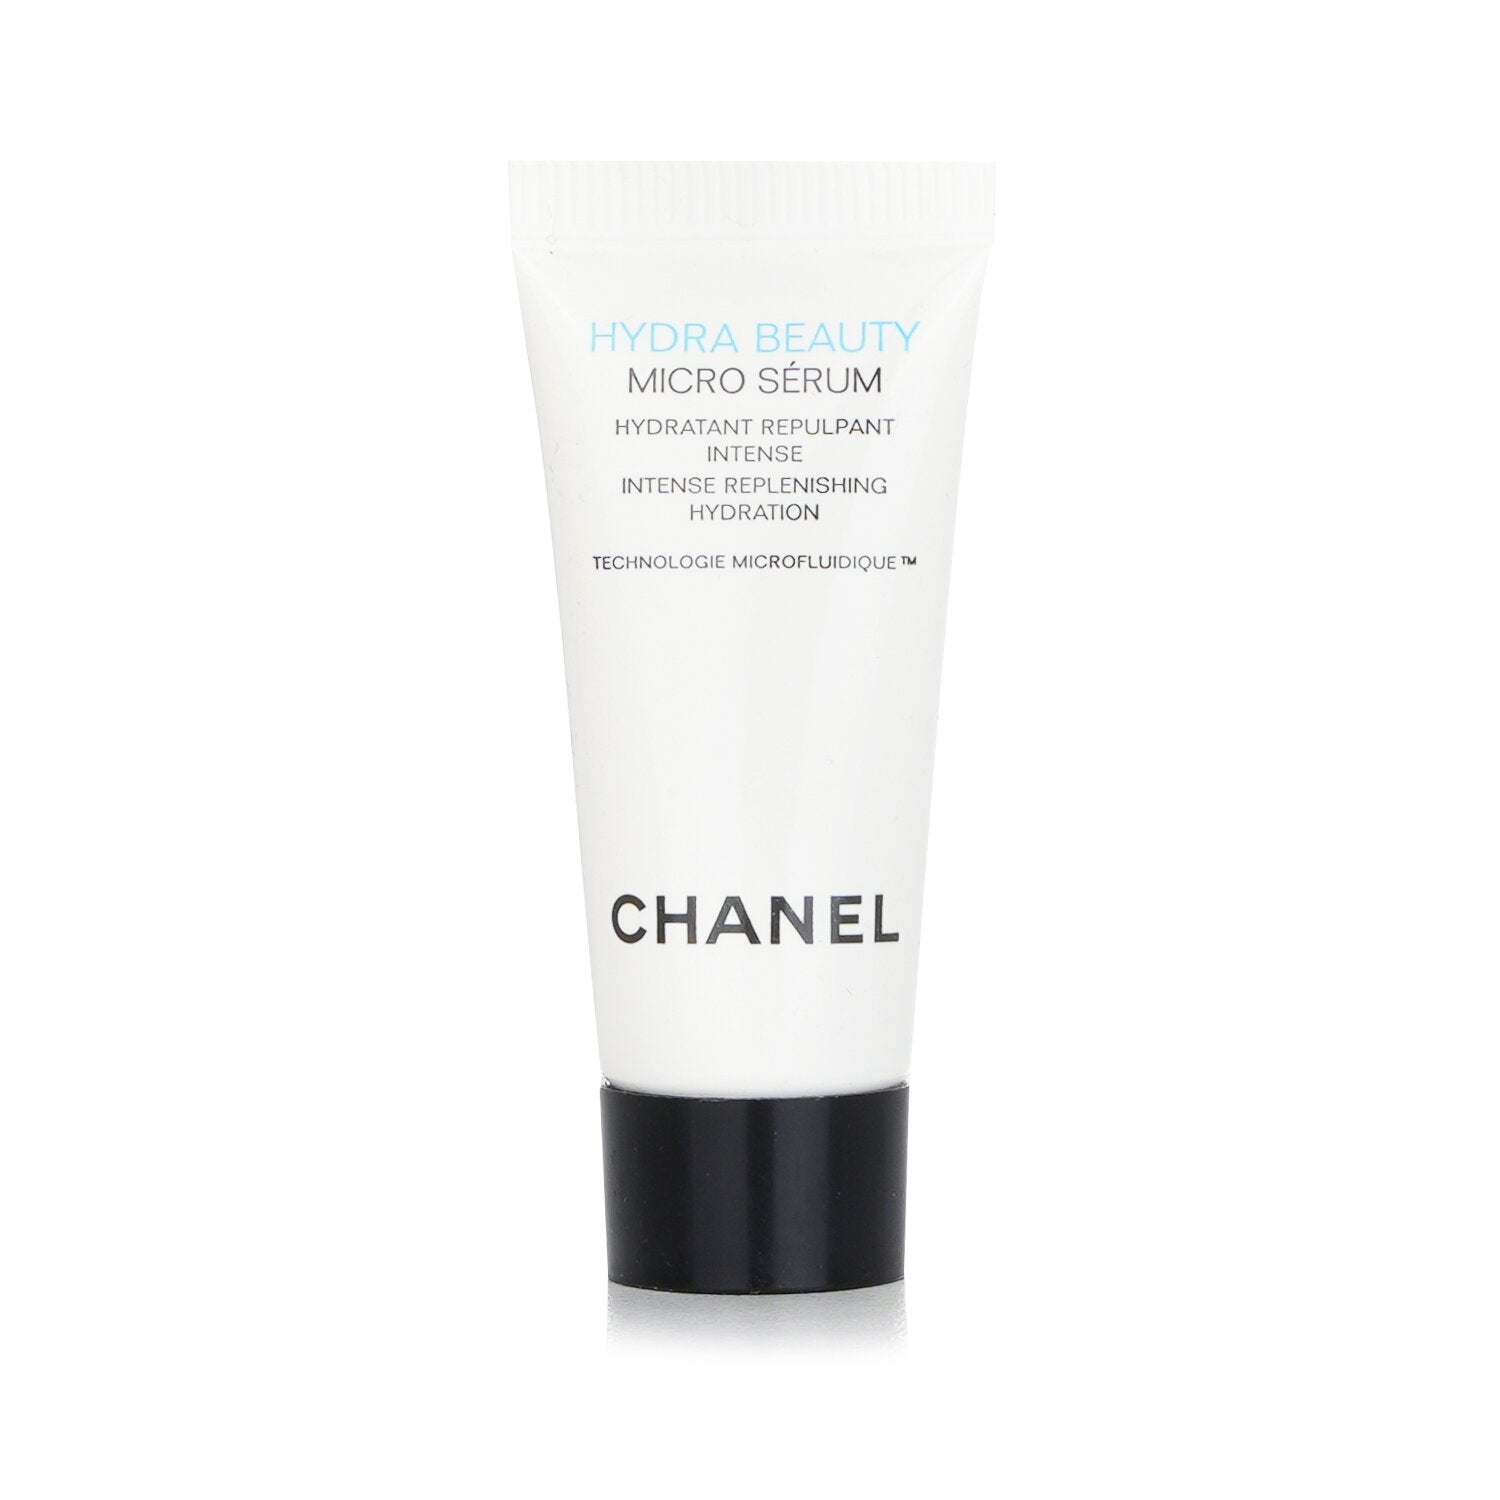 CHANEL Hydra Beauty Micro Creme Cream 5ml / 0.17 fl oz Sample Trial Size